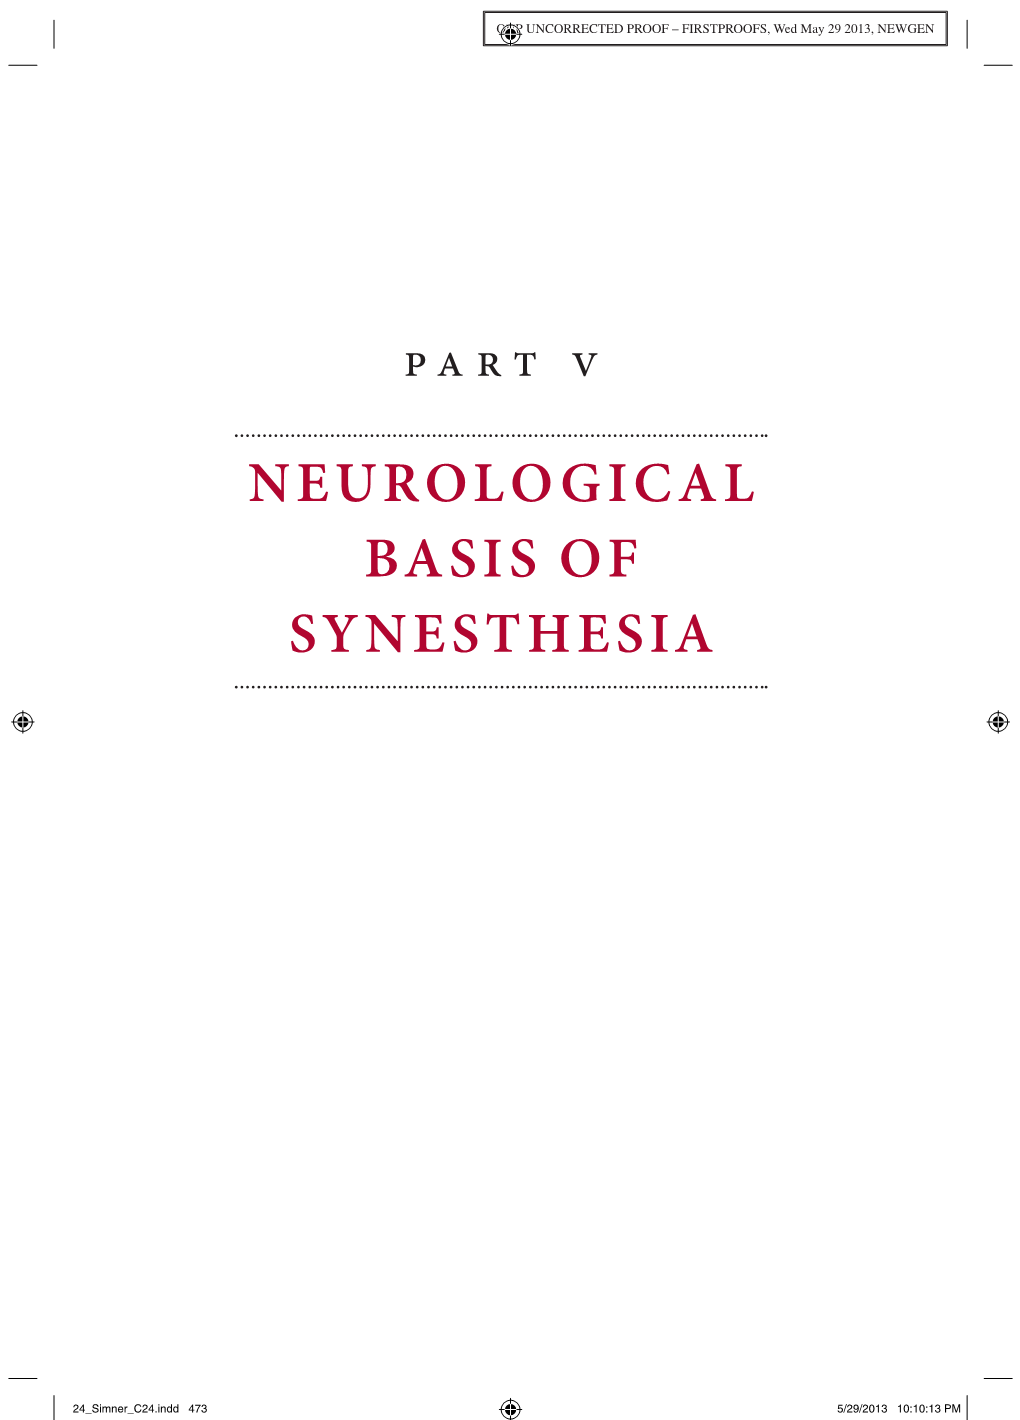 Neurological Basis of Synesthesia